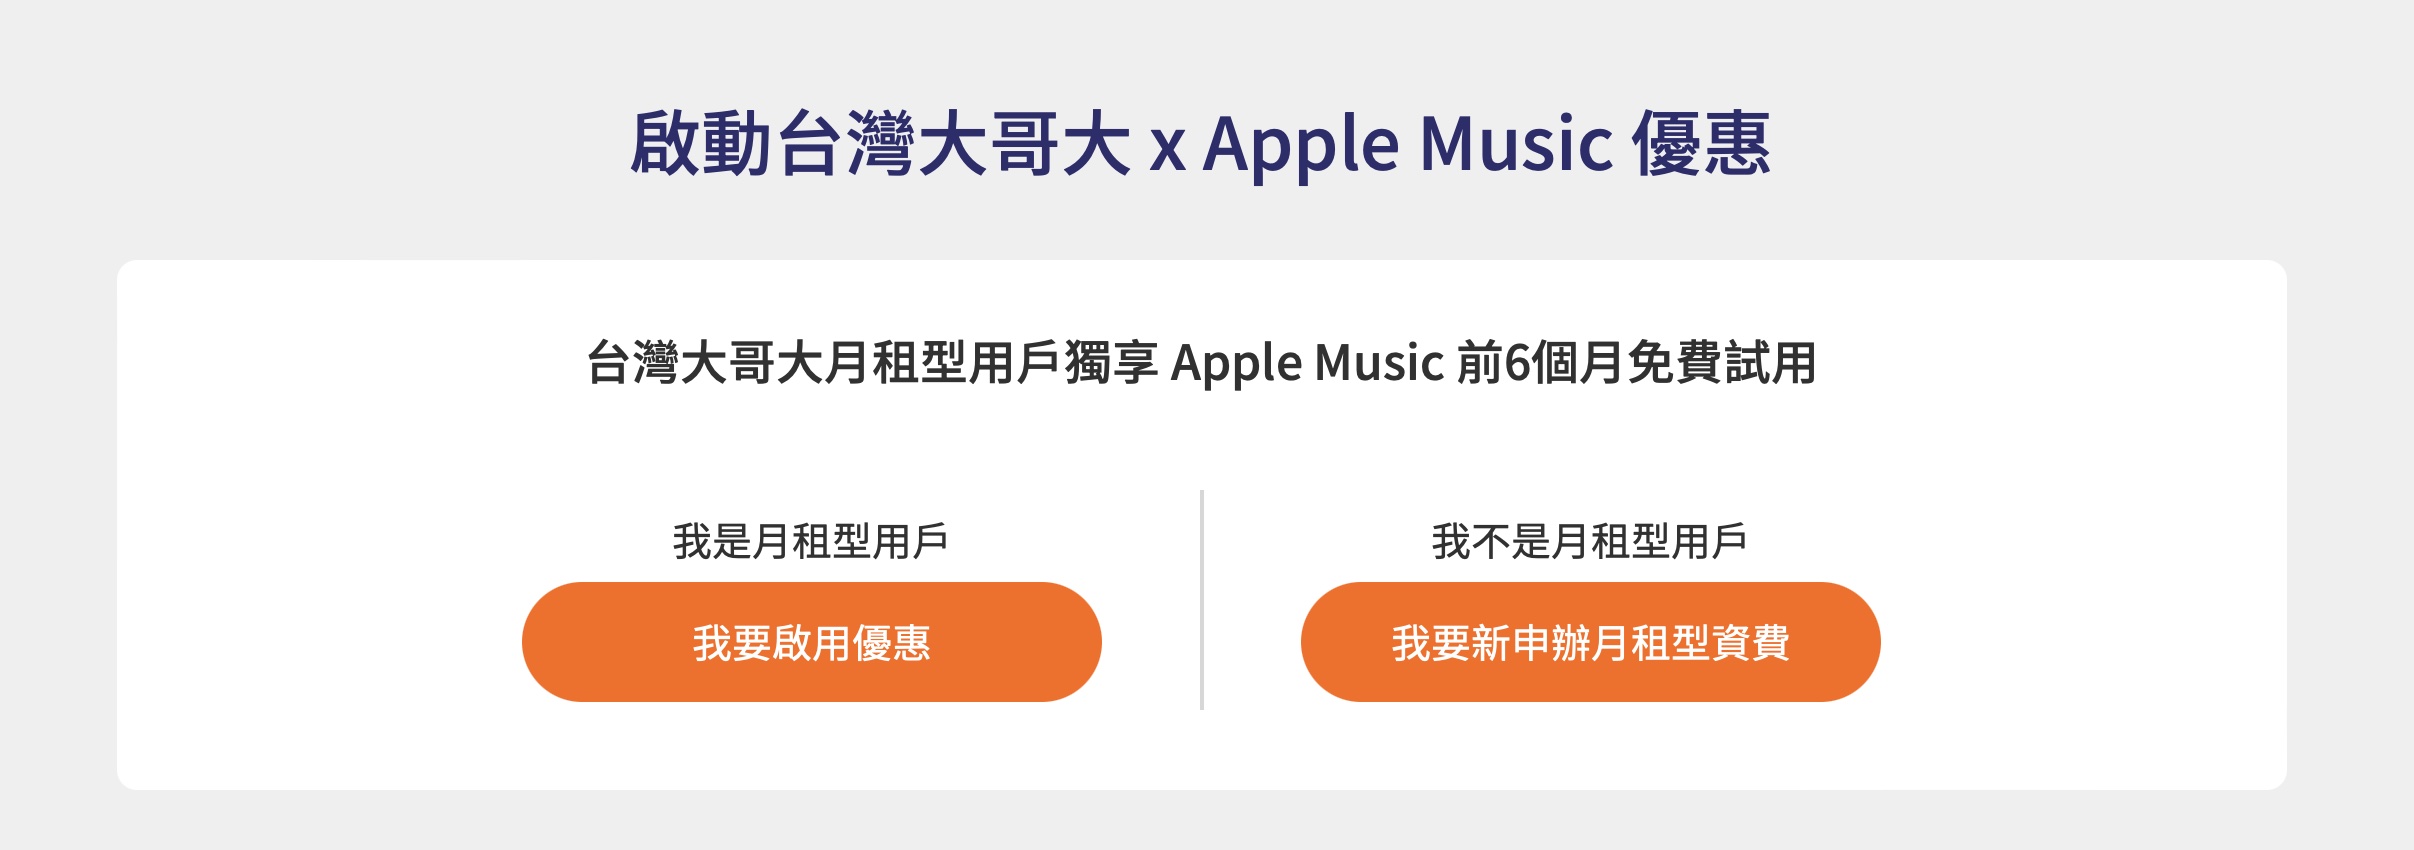 Apple Music 台灣大哥大 6 個月免費聽